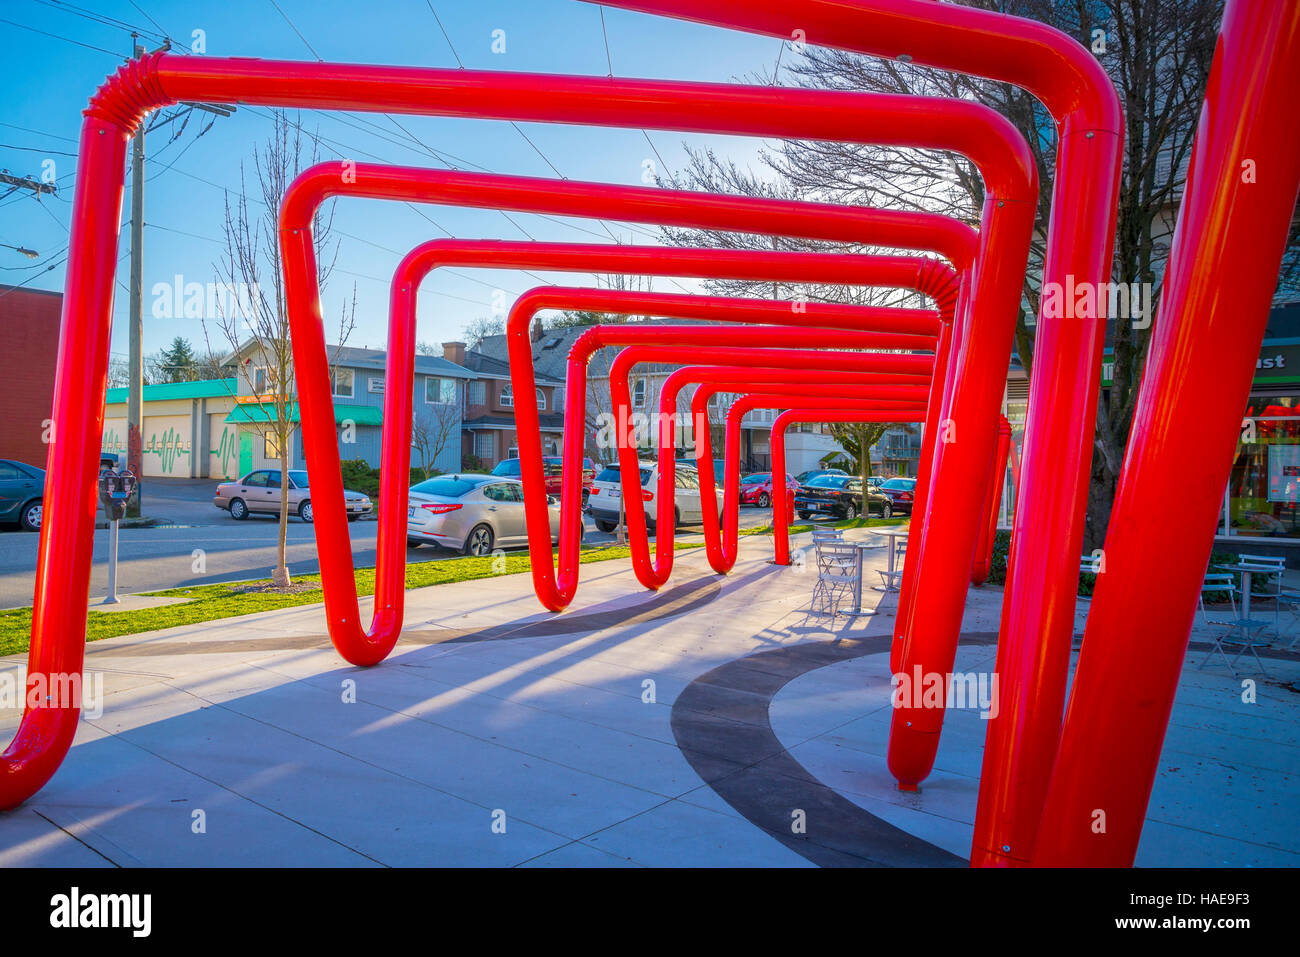 Bendy-straw trellis, public art installation, Mid-Main Park, Main Street, Vancouver, British Columbia, Canada Stock Photo